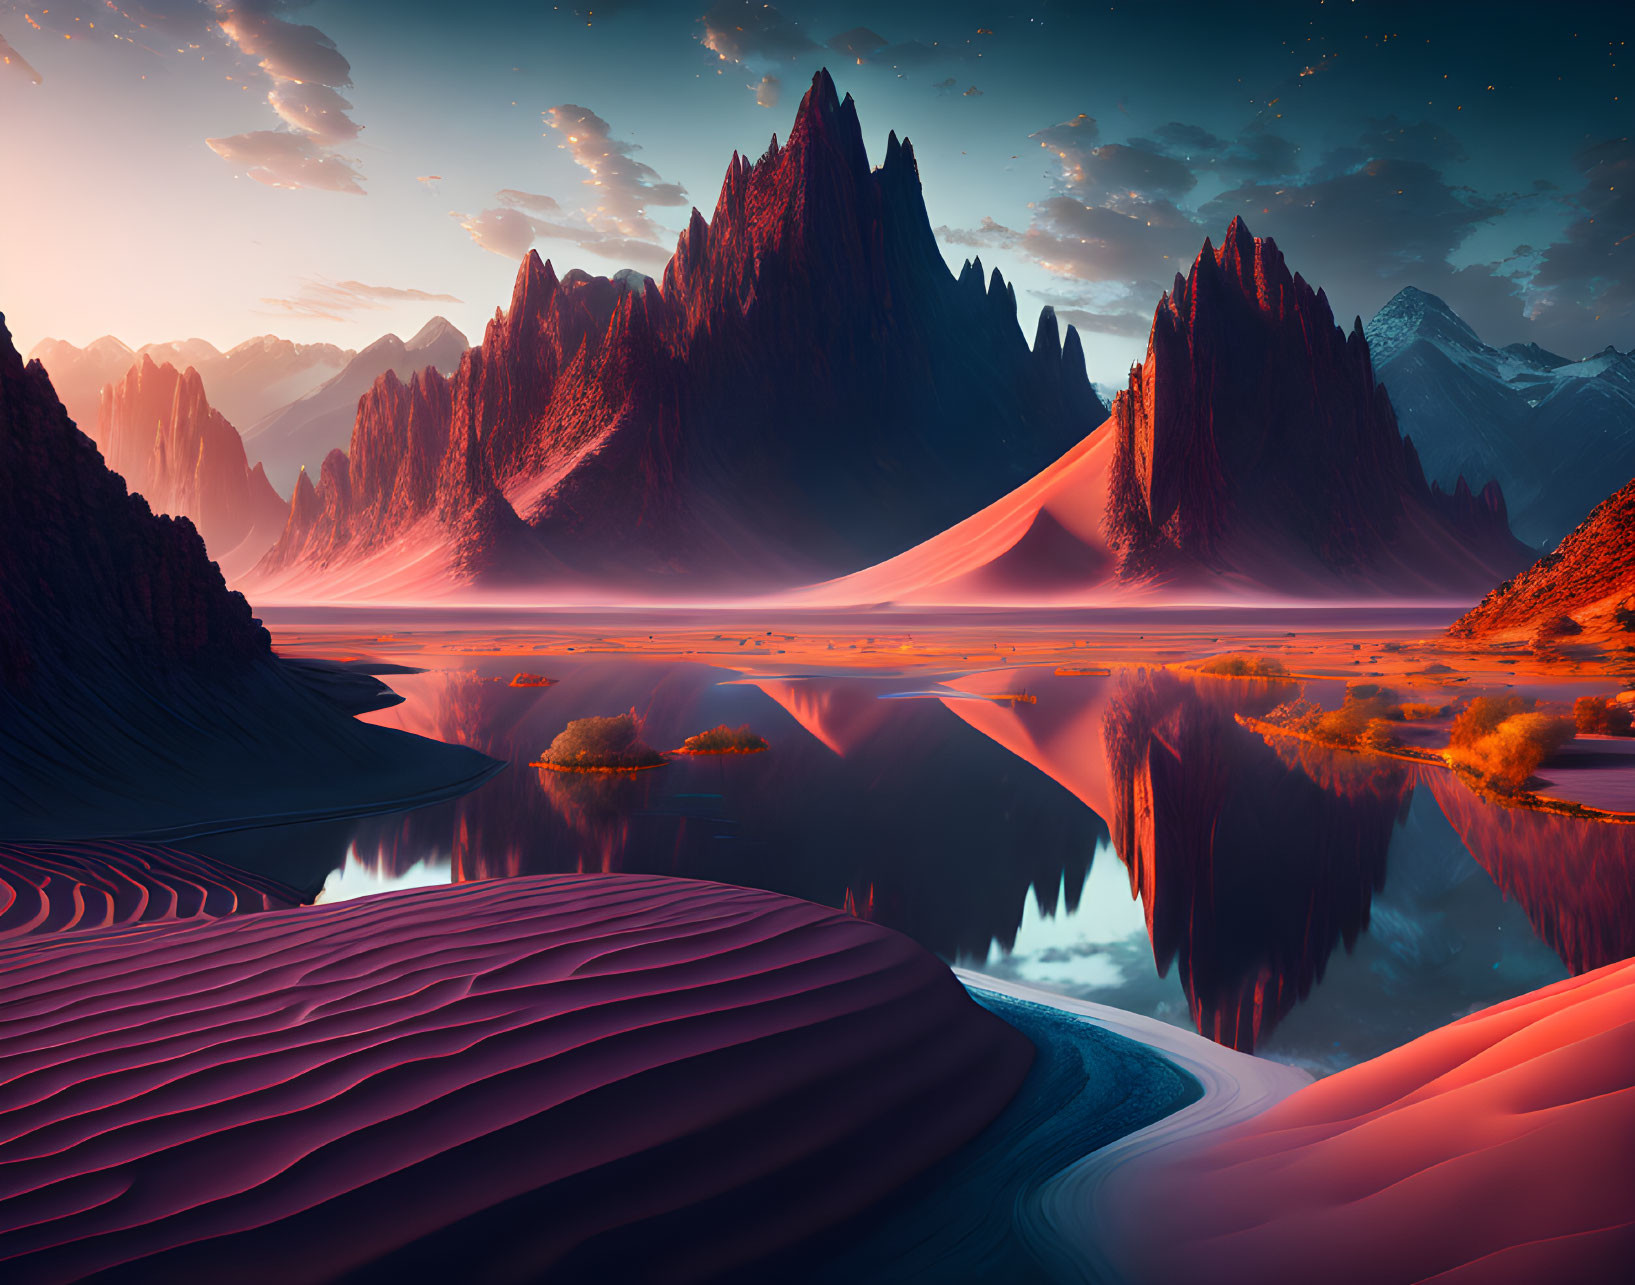 Serene lake reflecting towering peaks and sand dunes under twilight sky